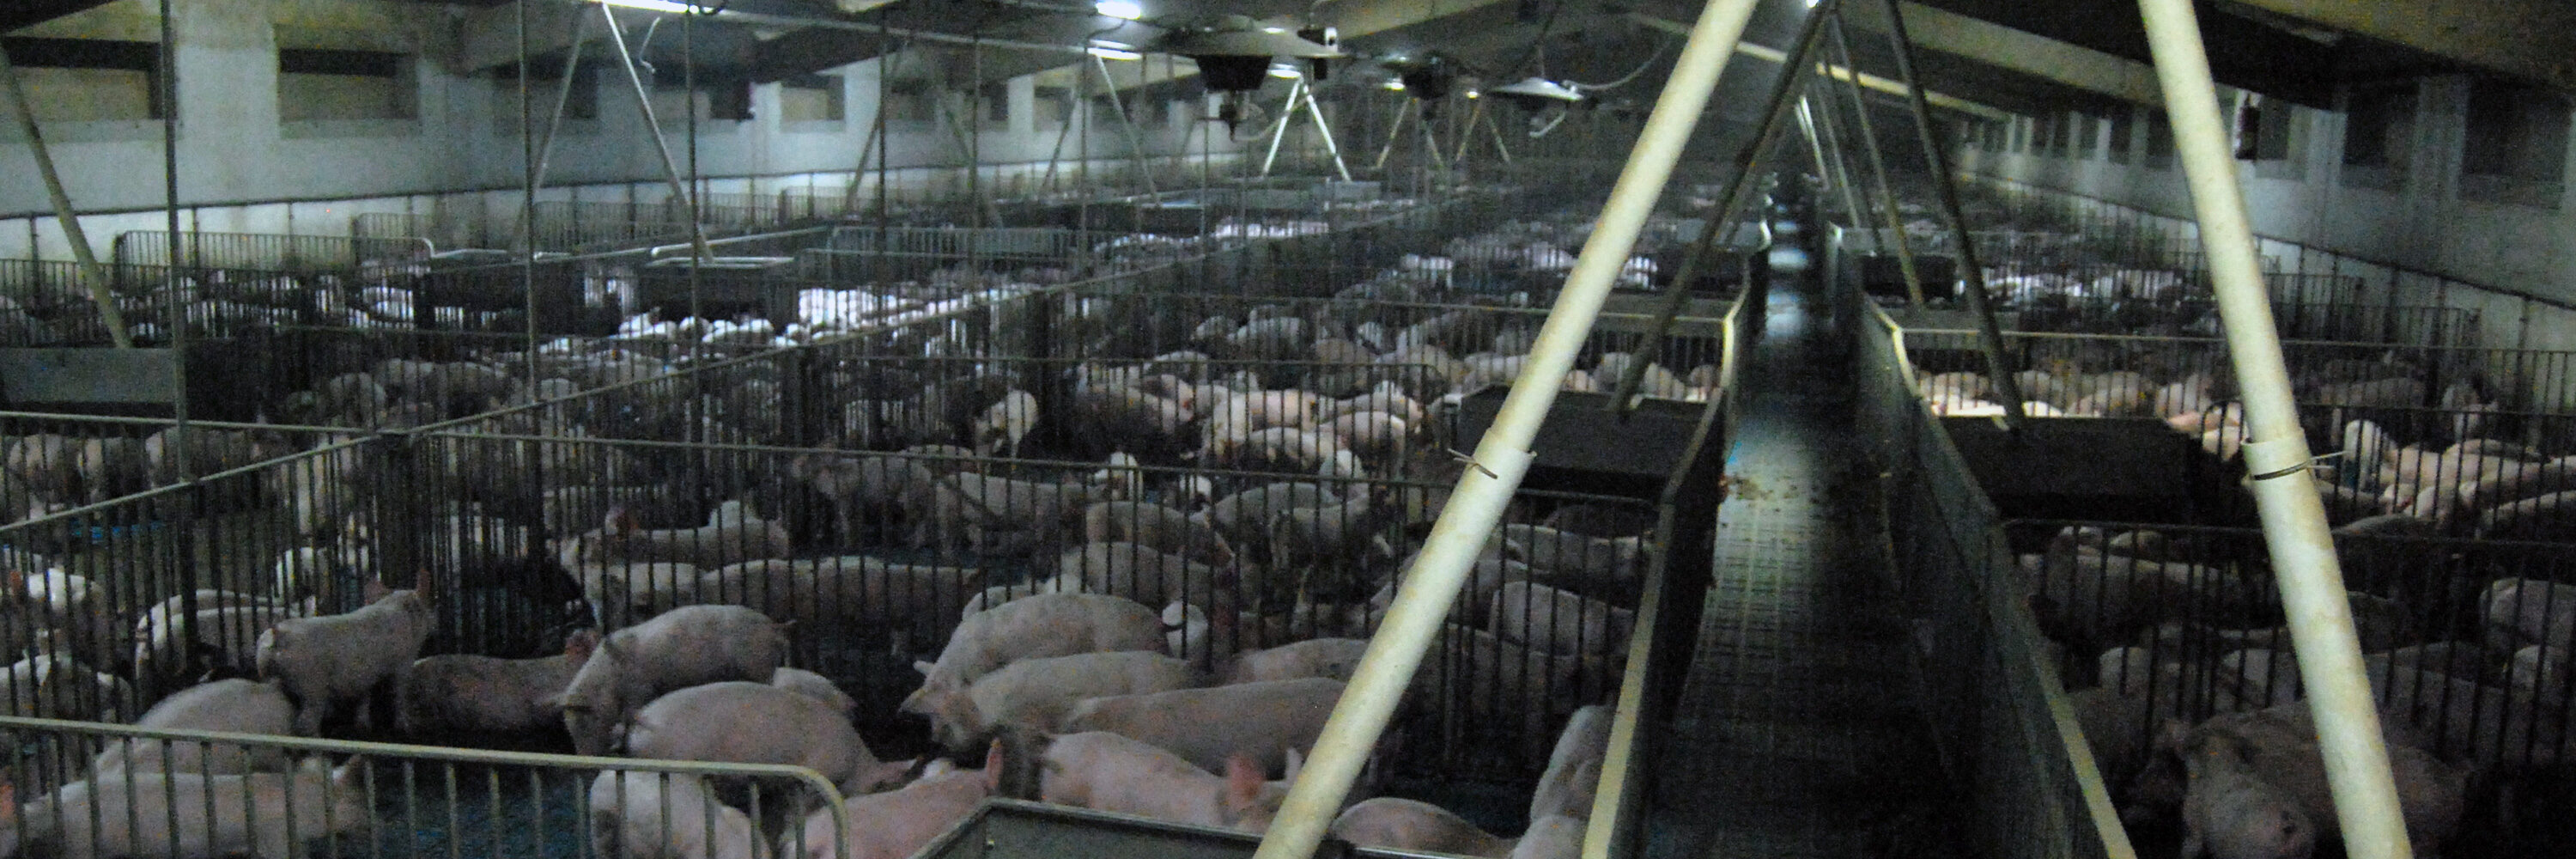 inside a pig farm in Spain